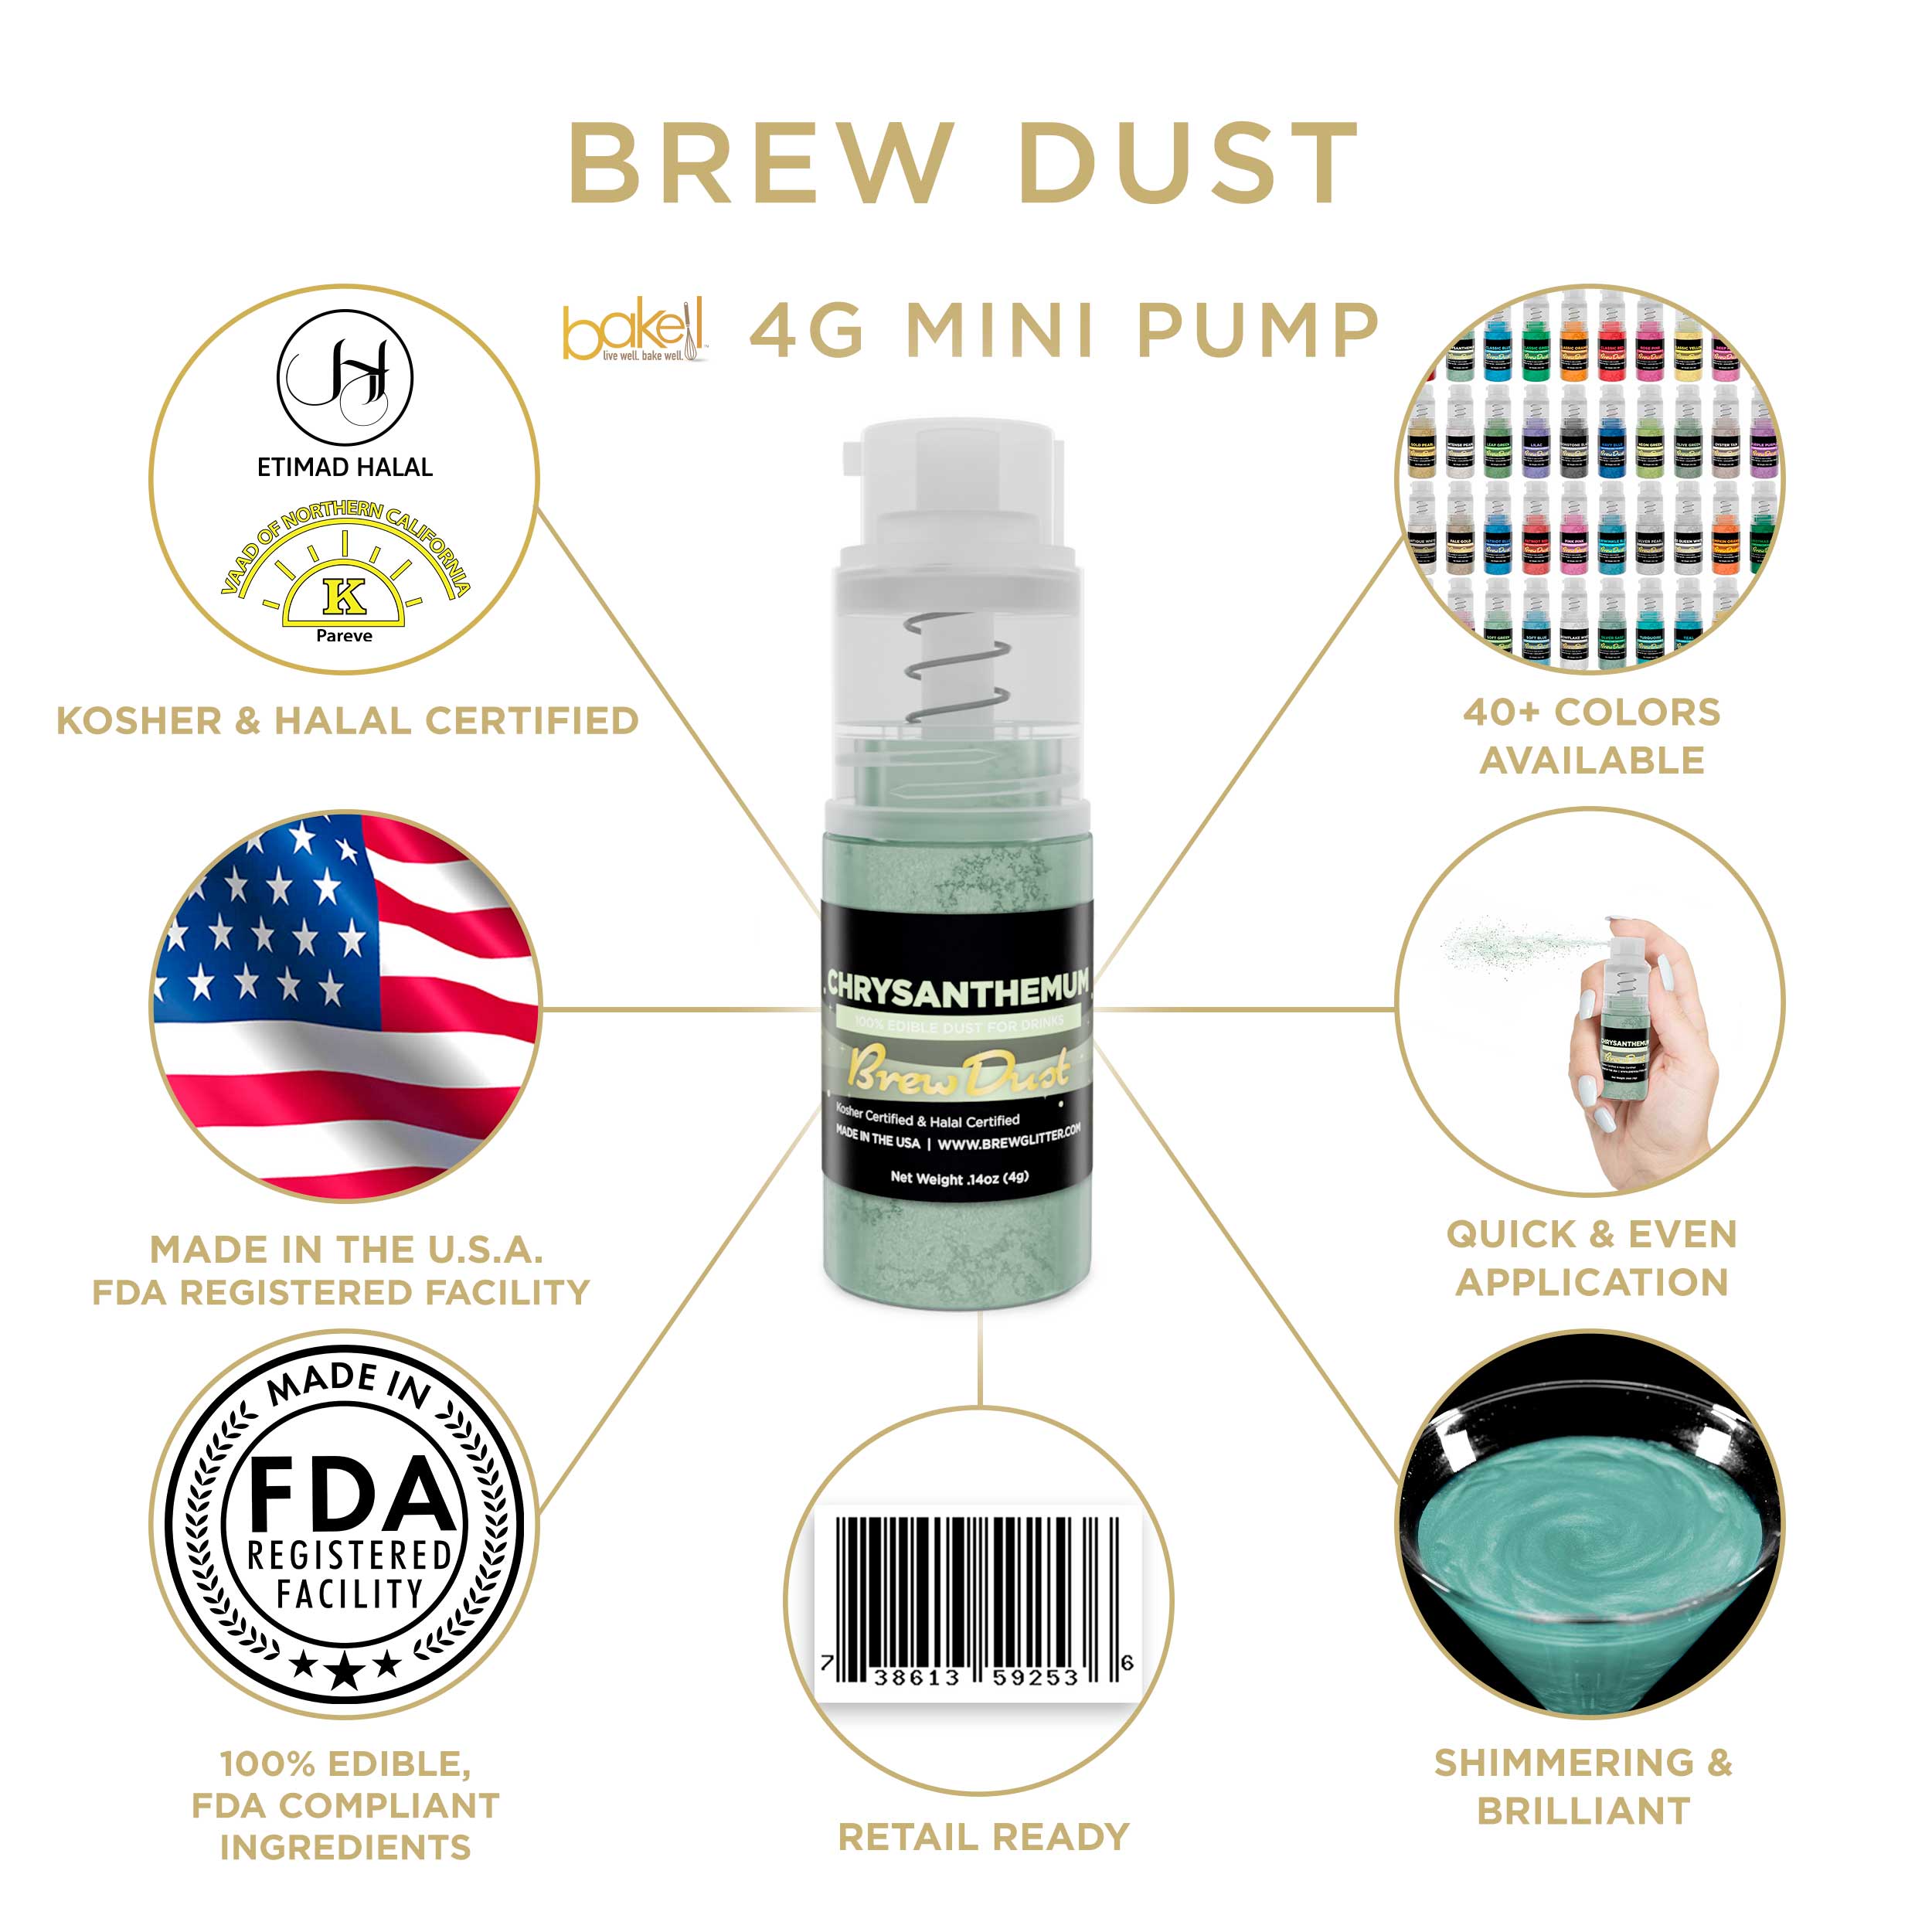 Chrysanthemum Green Brew Dust Miniature Spray Pump | Infographic and Information